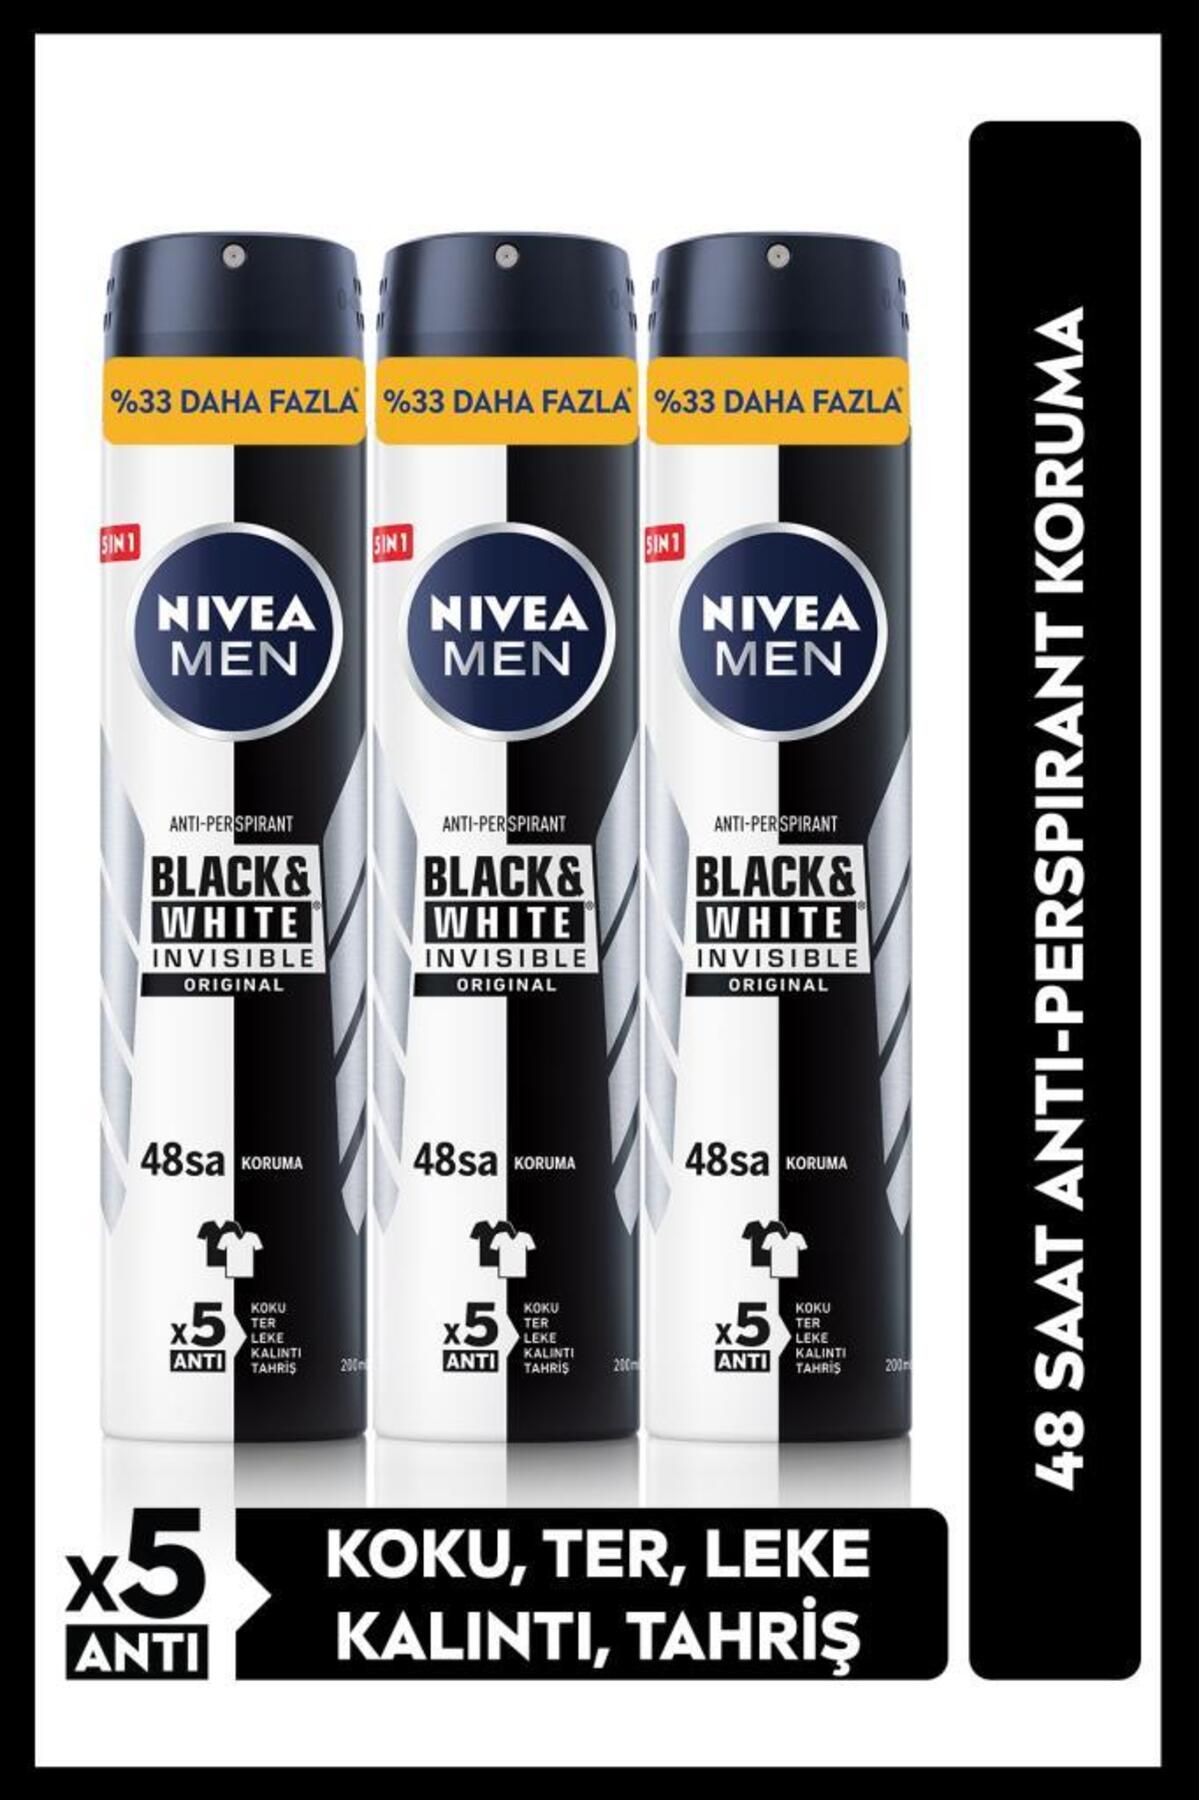 NIVEA Men Erkek Sprey Deodorant Black&white Invisible Original 48 Saat Anti-perspirant Koruma 200ml